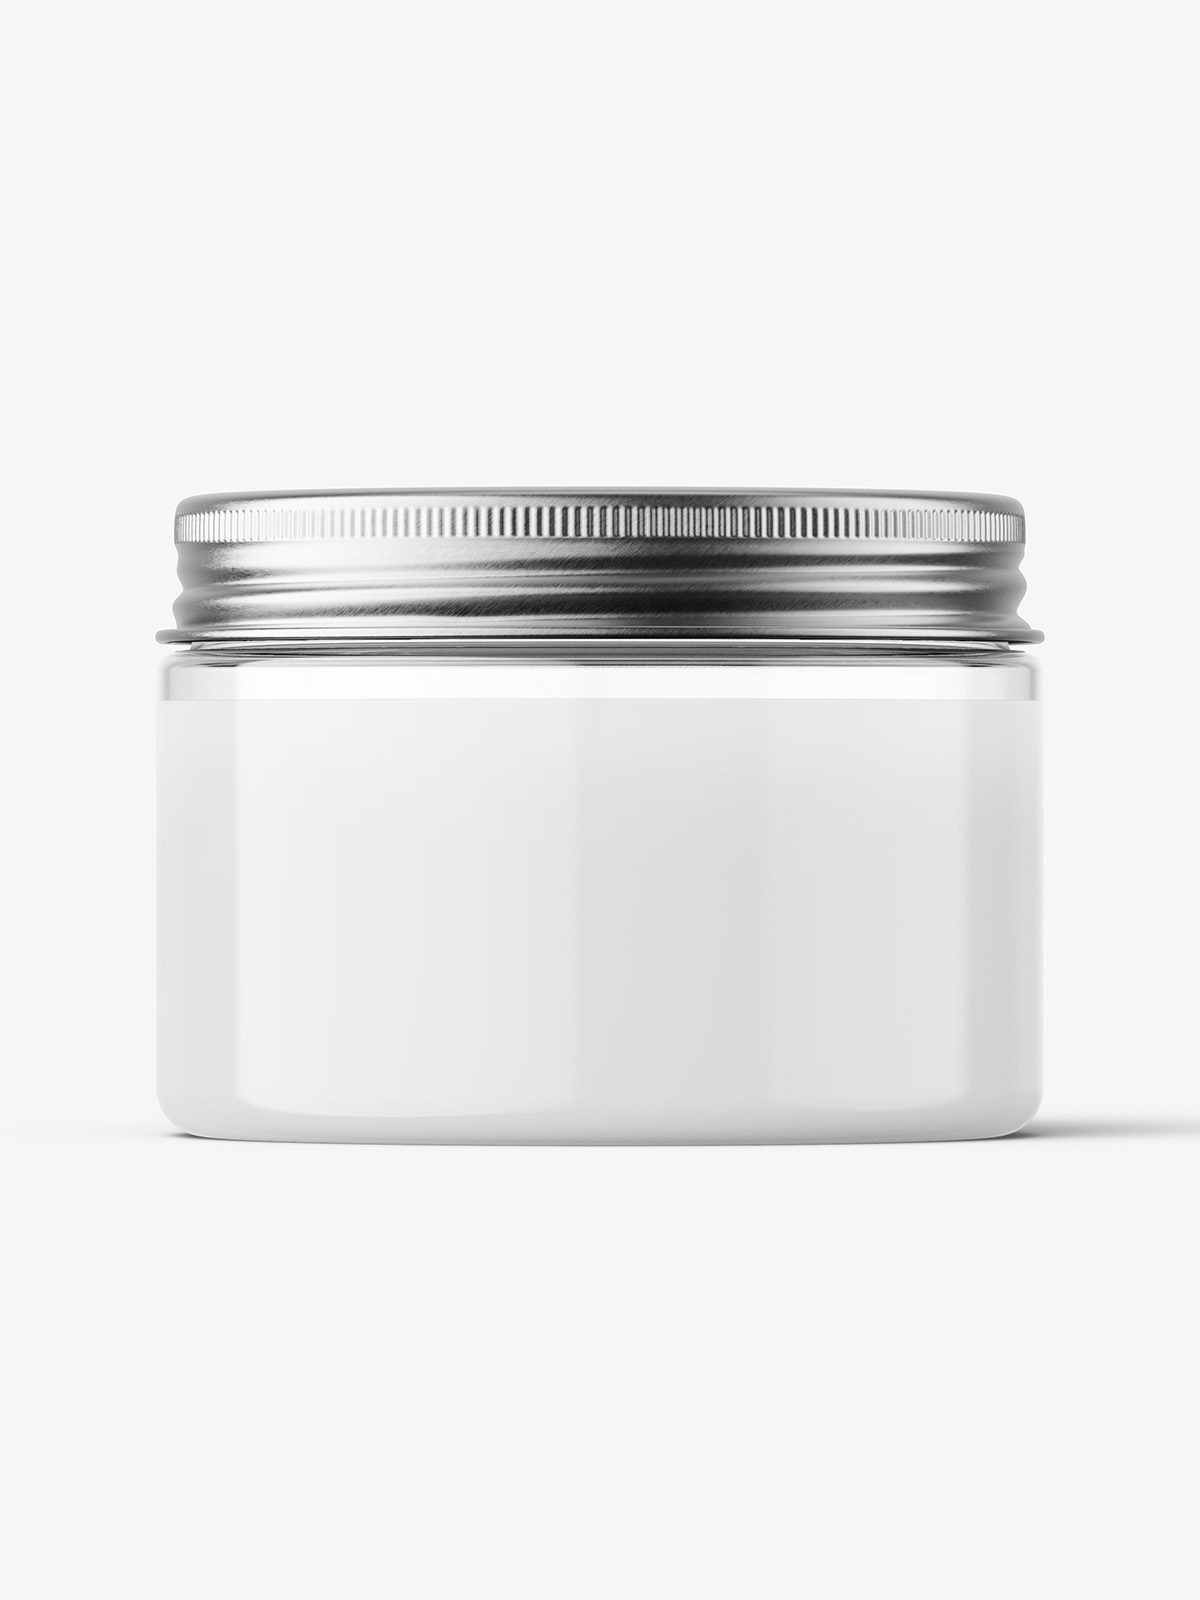 Download Transparent Jar With Metallic Cap Mockup 150ml Smarty Mockups Yellowimages Mockups